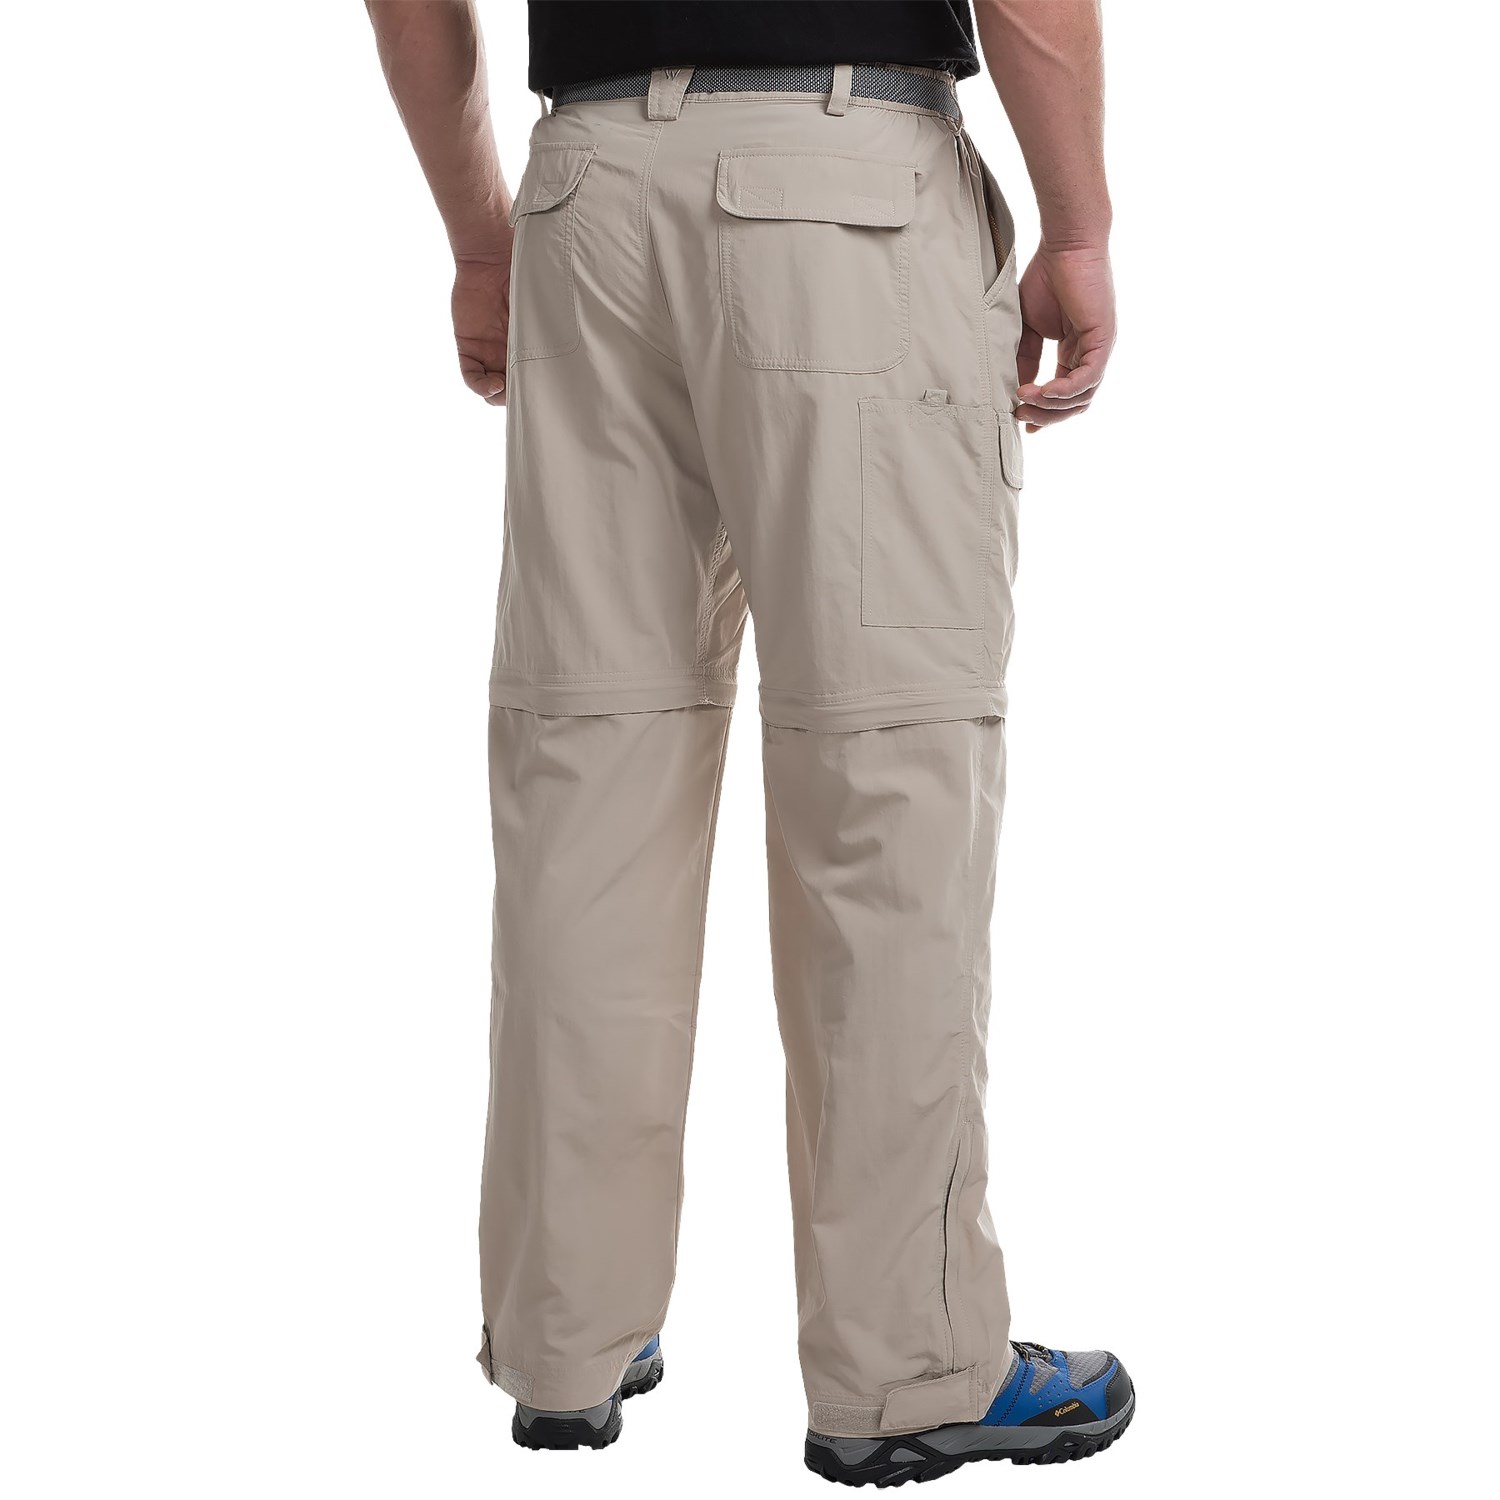 White Sierra Trail Pants (For Men) - Save 50%